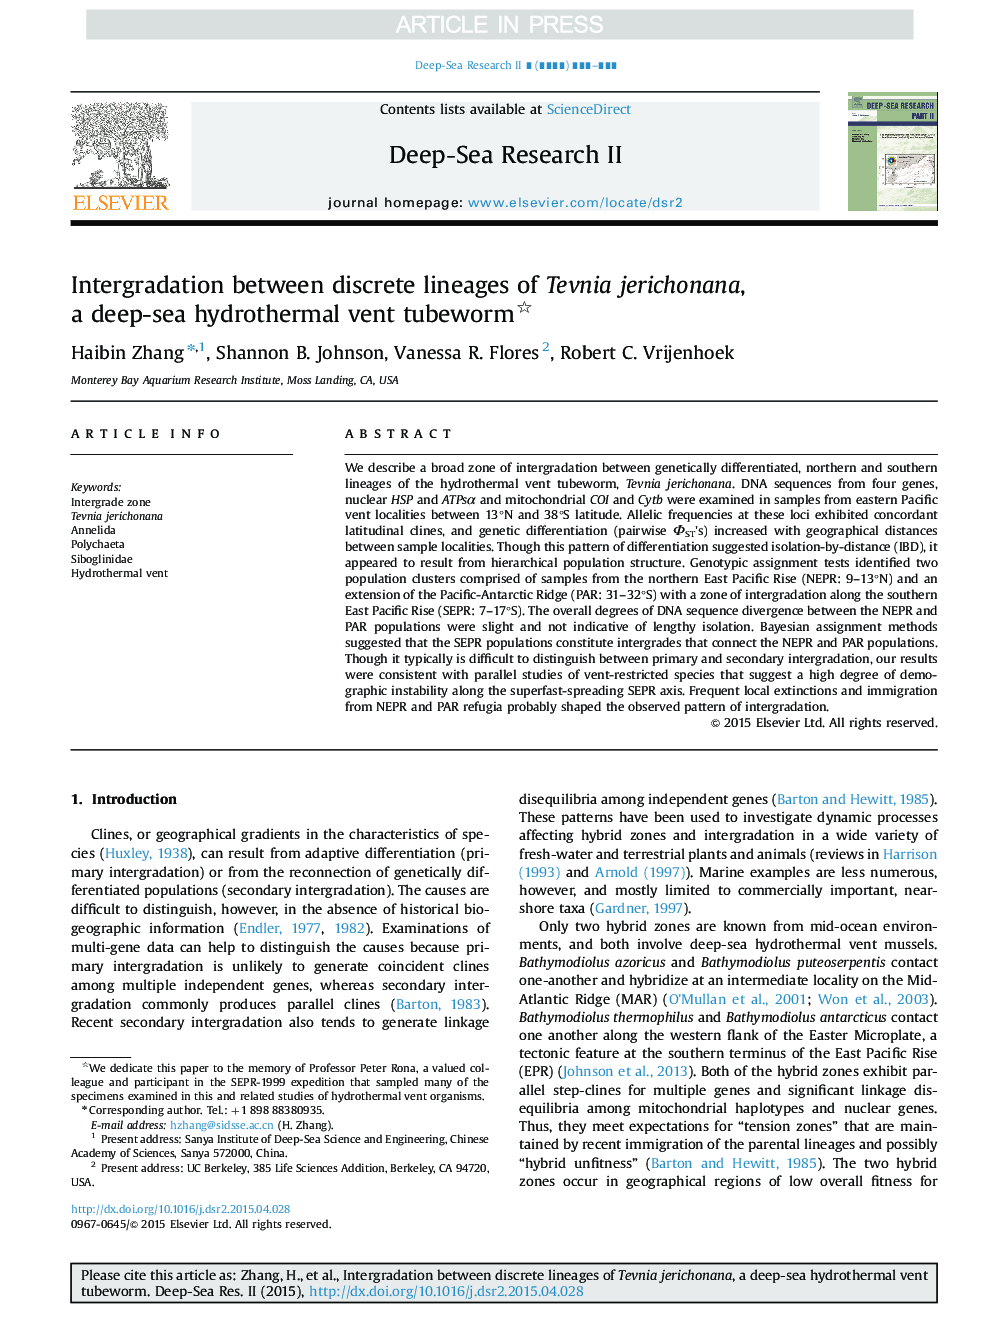 Intergradation between discrete lineages of Tevnia jerichonana, a deep-sea hydrothermal vent tubeworm